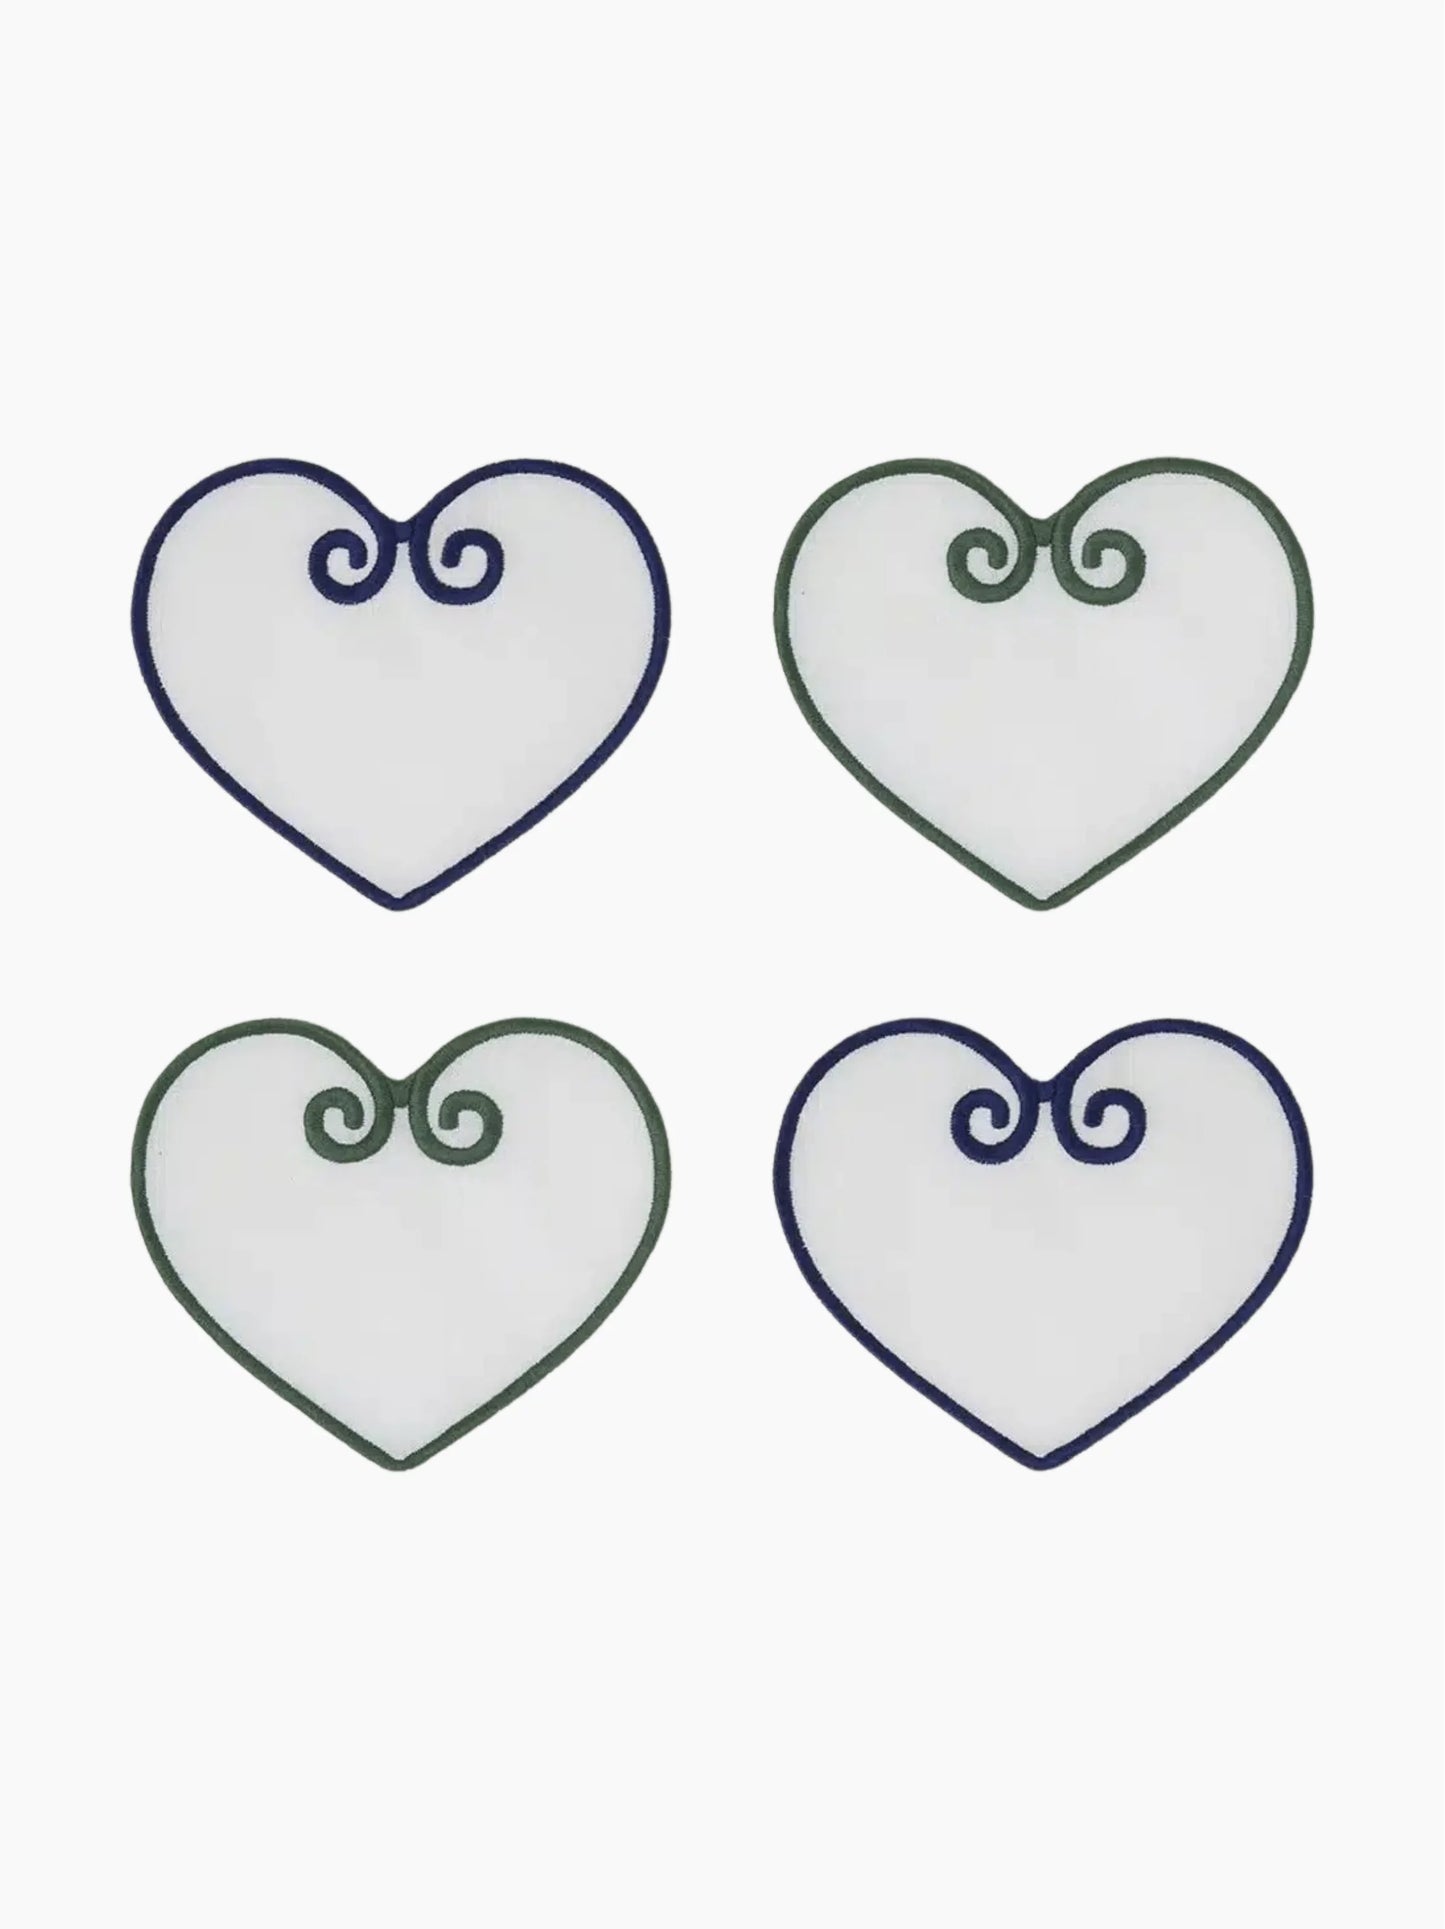 Blue & Green Heart Coasters